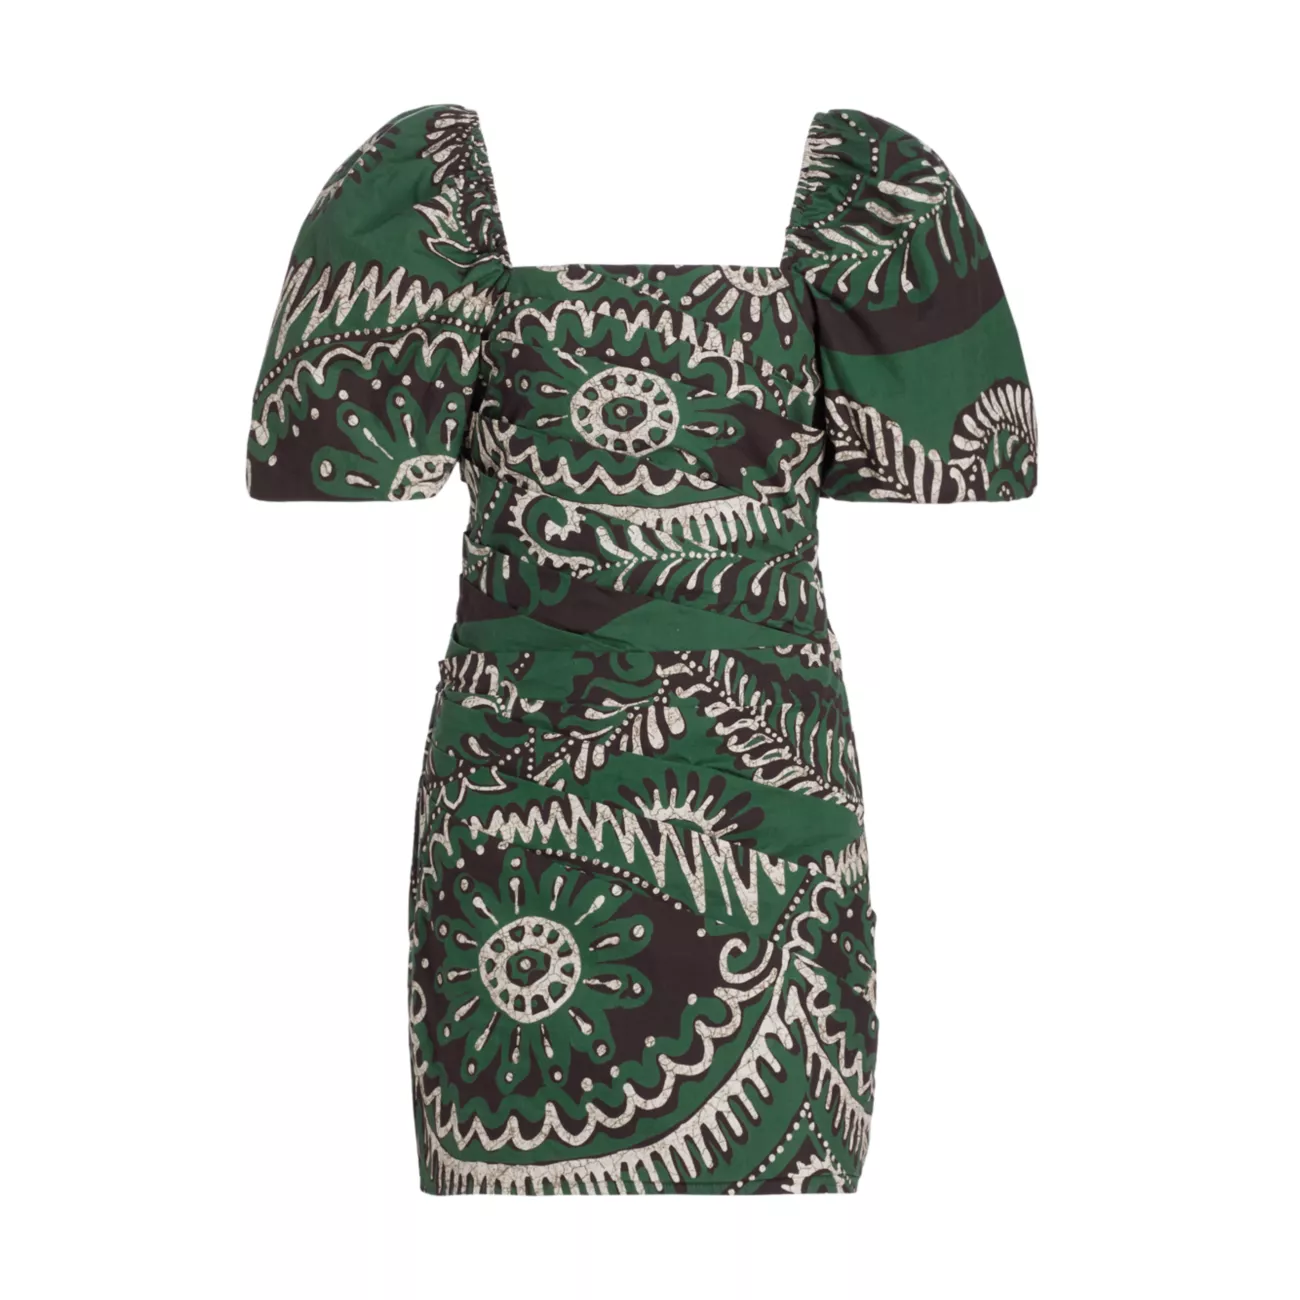 Мини-платье Charlough с объемными рукавами и геометрическим узором Sea